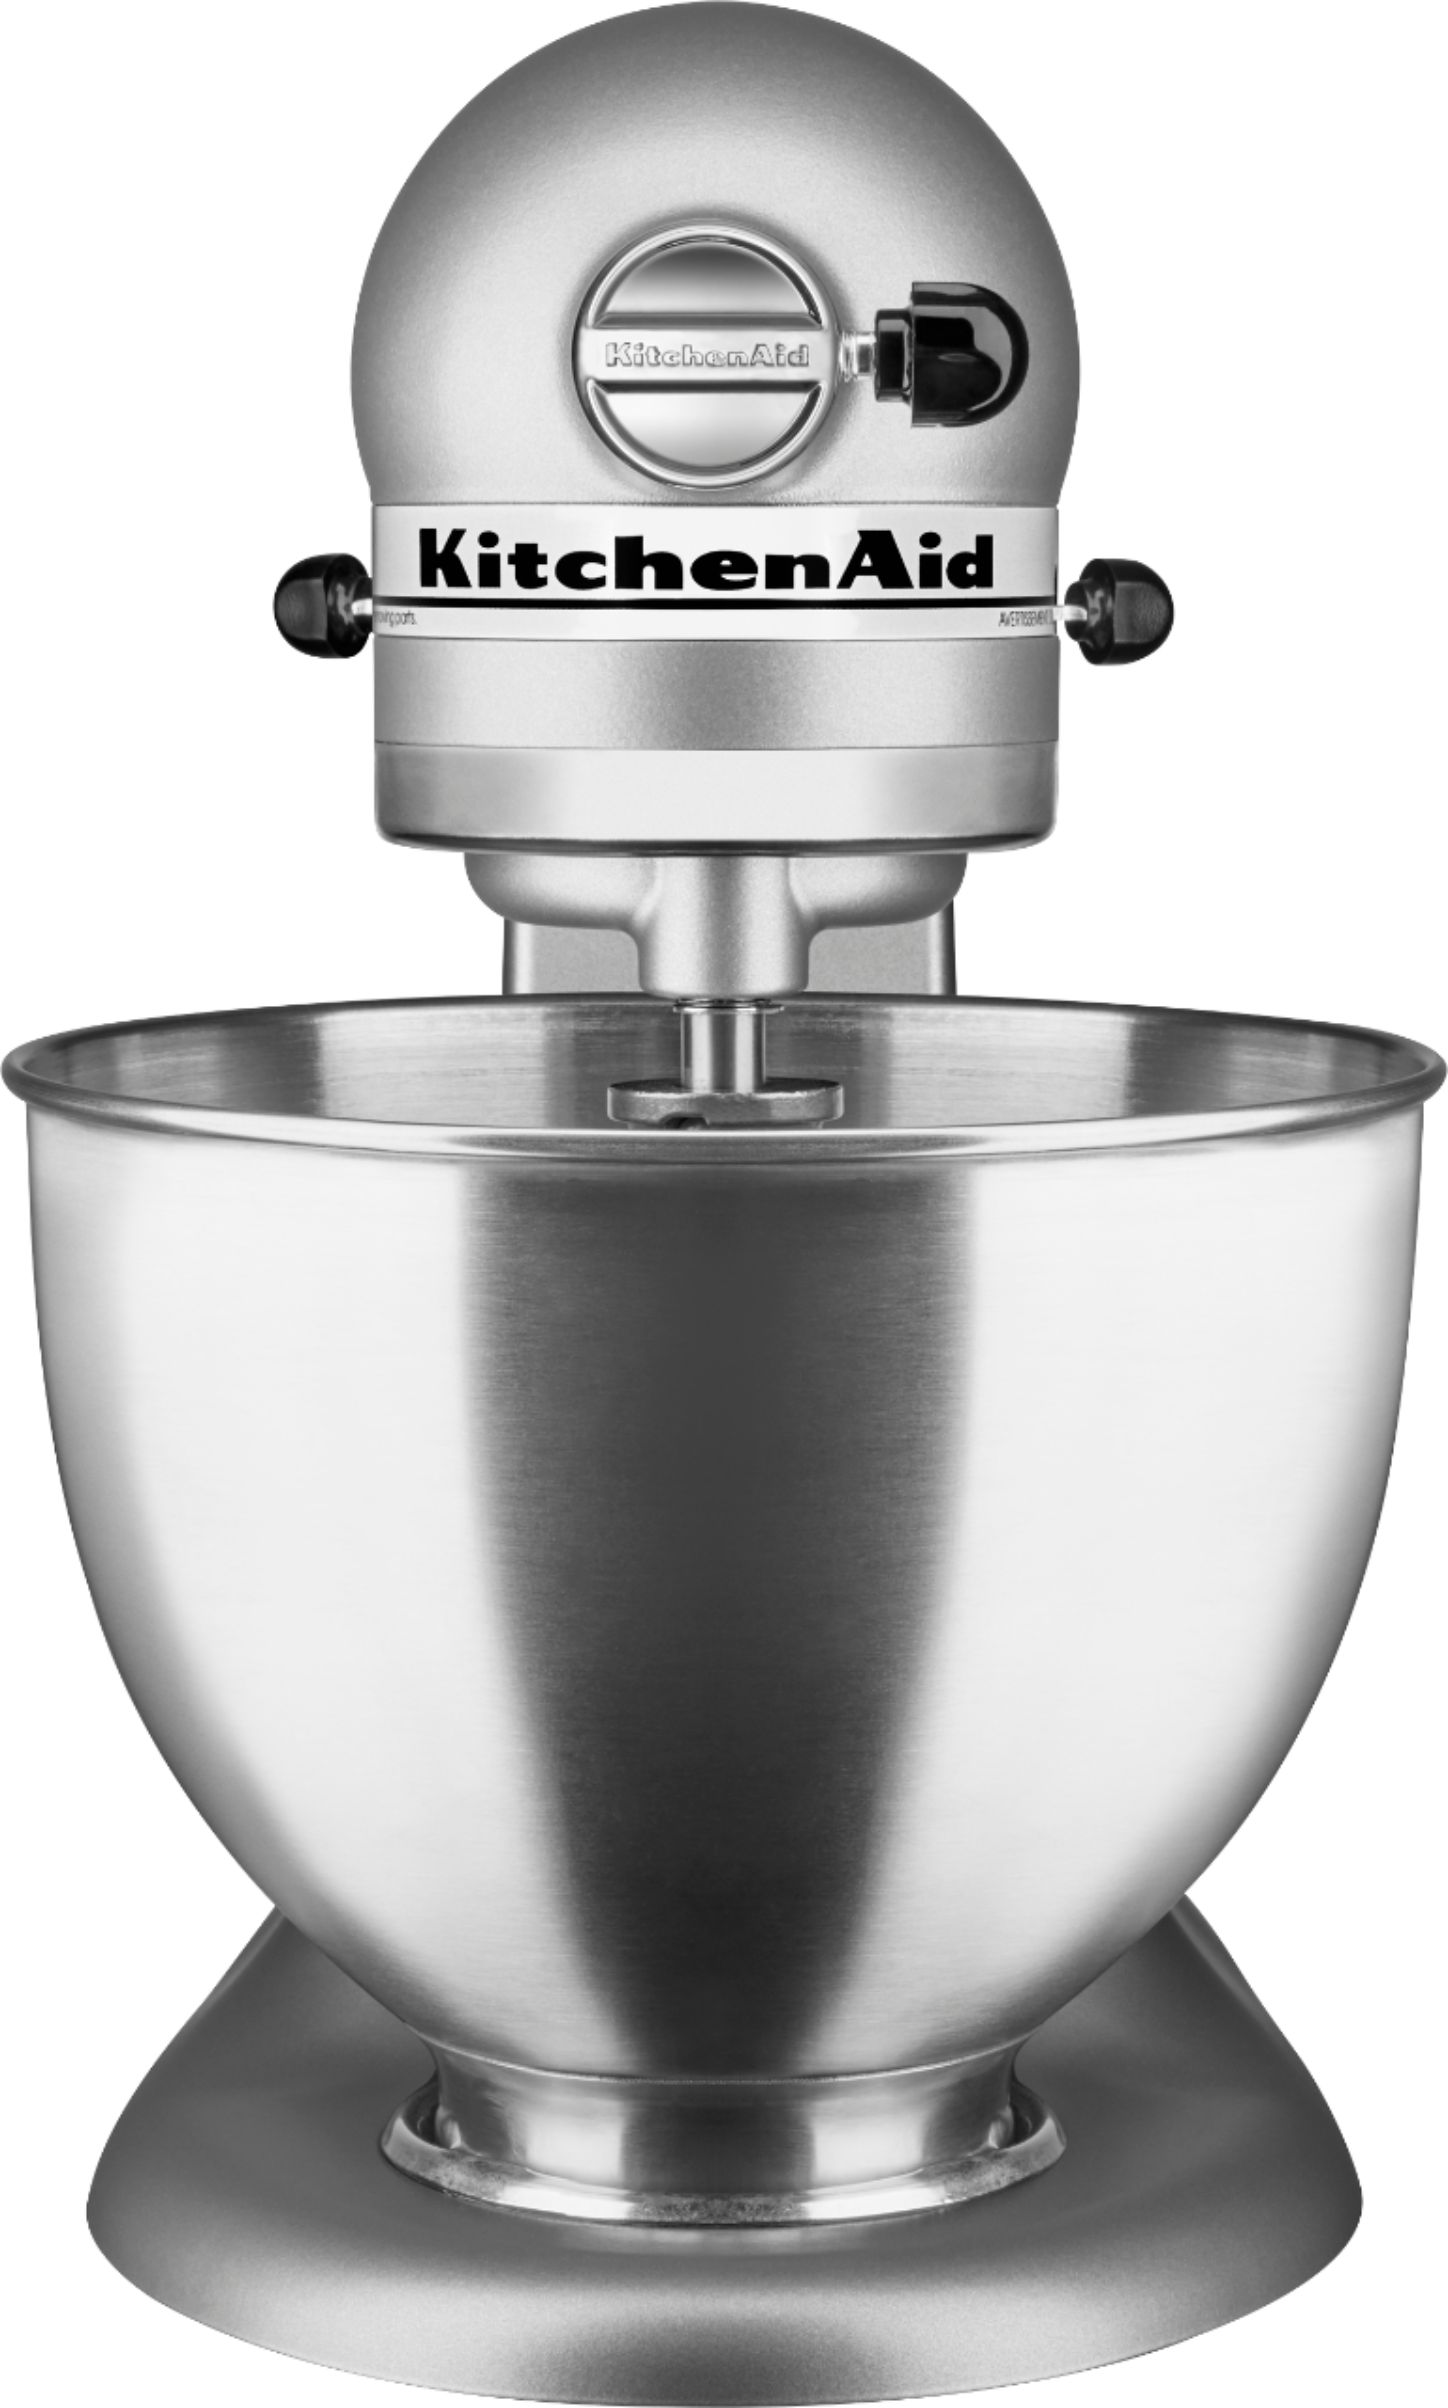  KitchenAid 5KSM5SSBHM Stand Mixer Optional Accessory, Hammered  Steel, Silver: Home & Kitchen